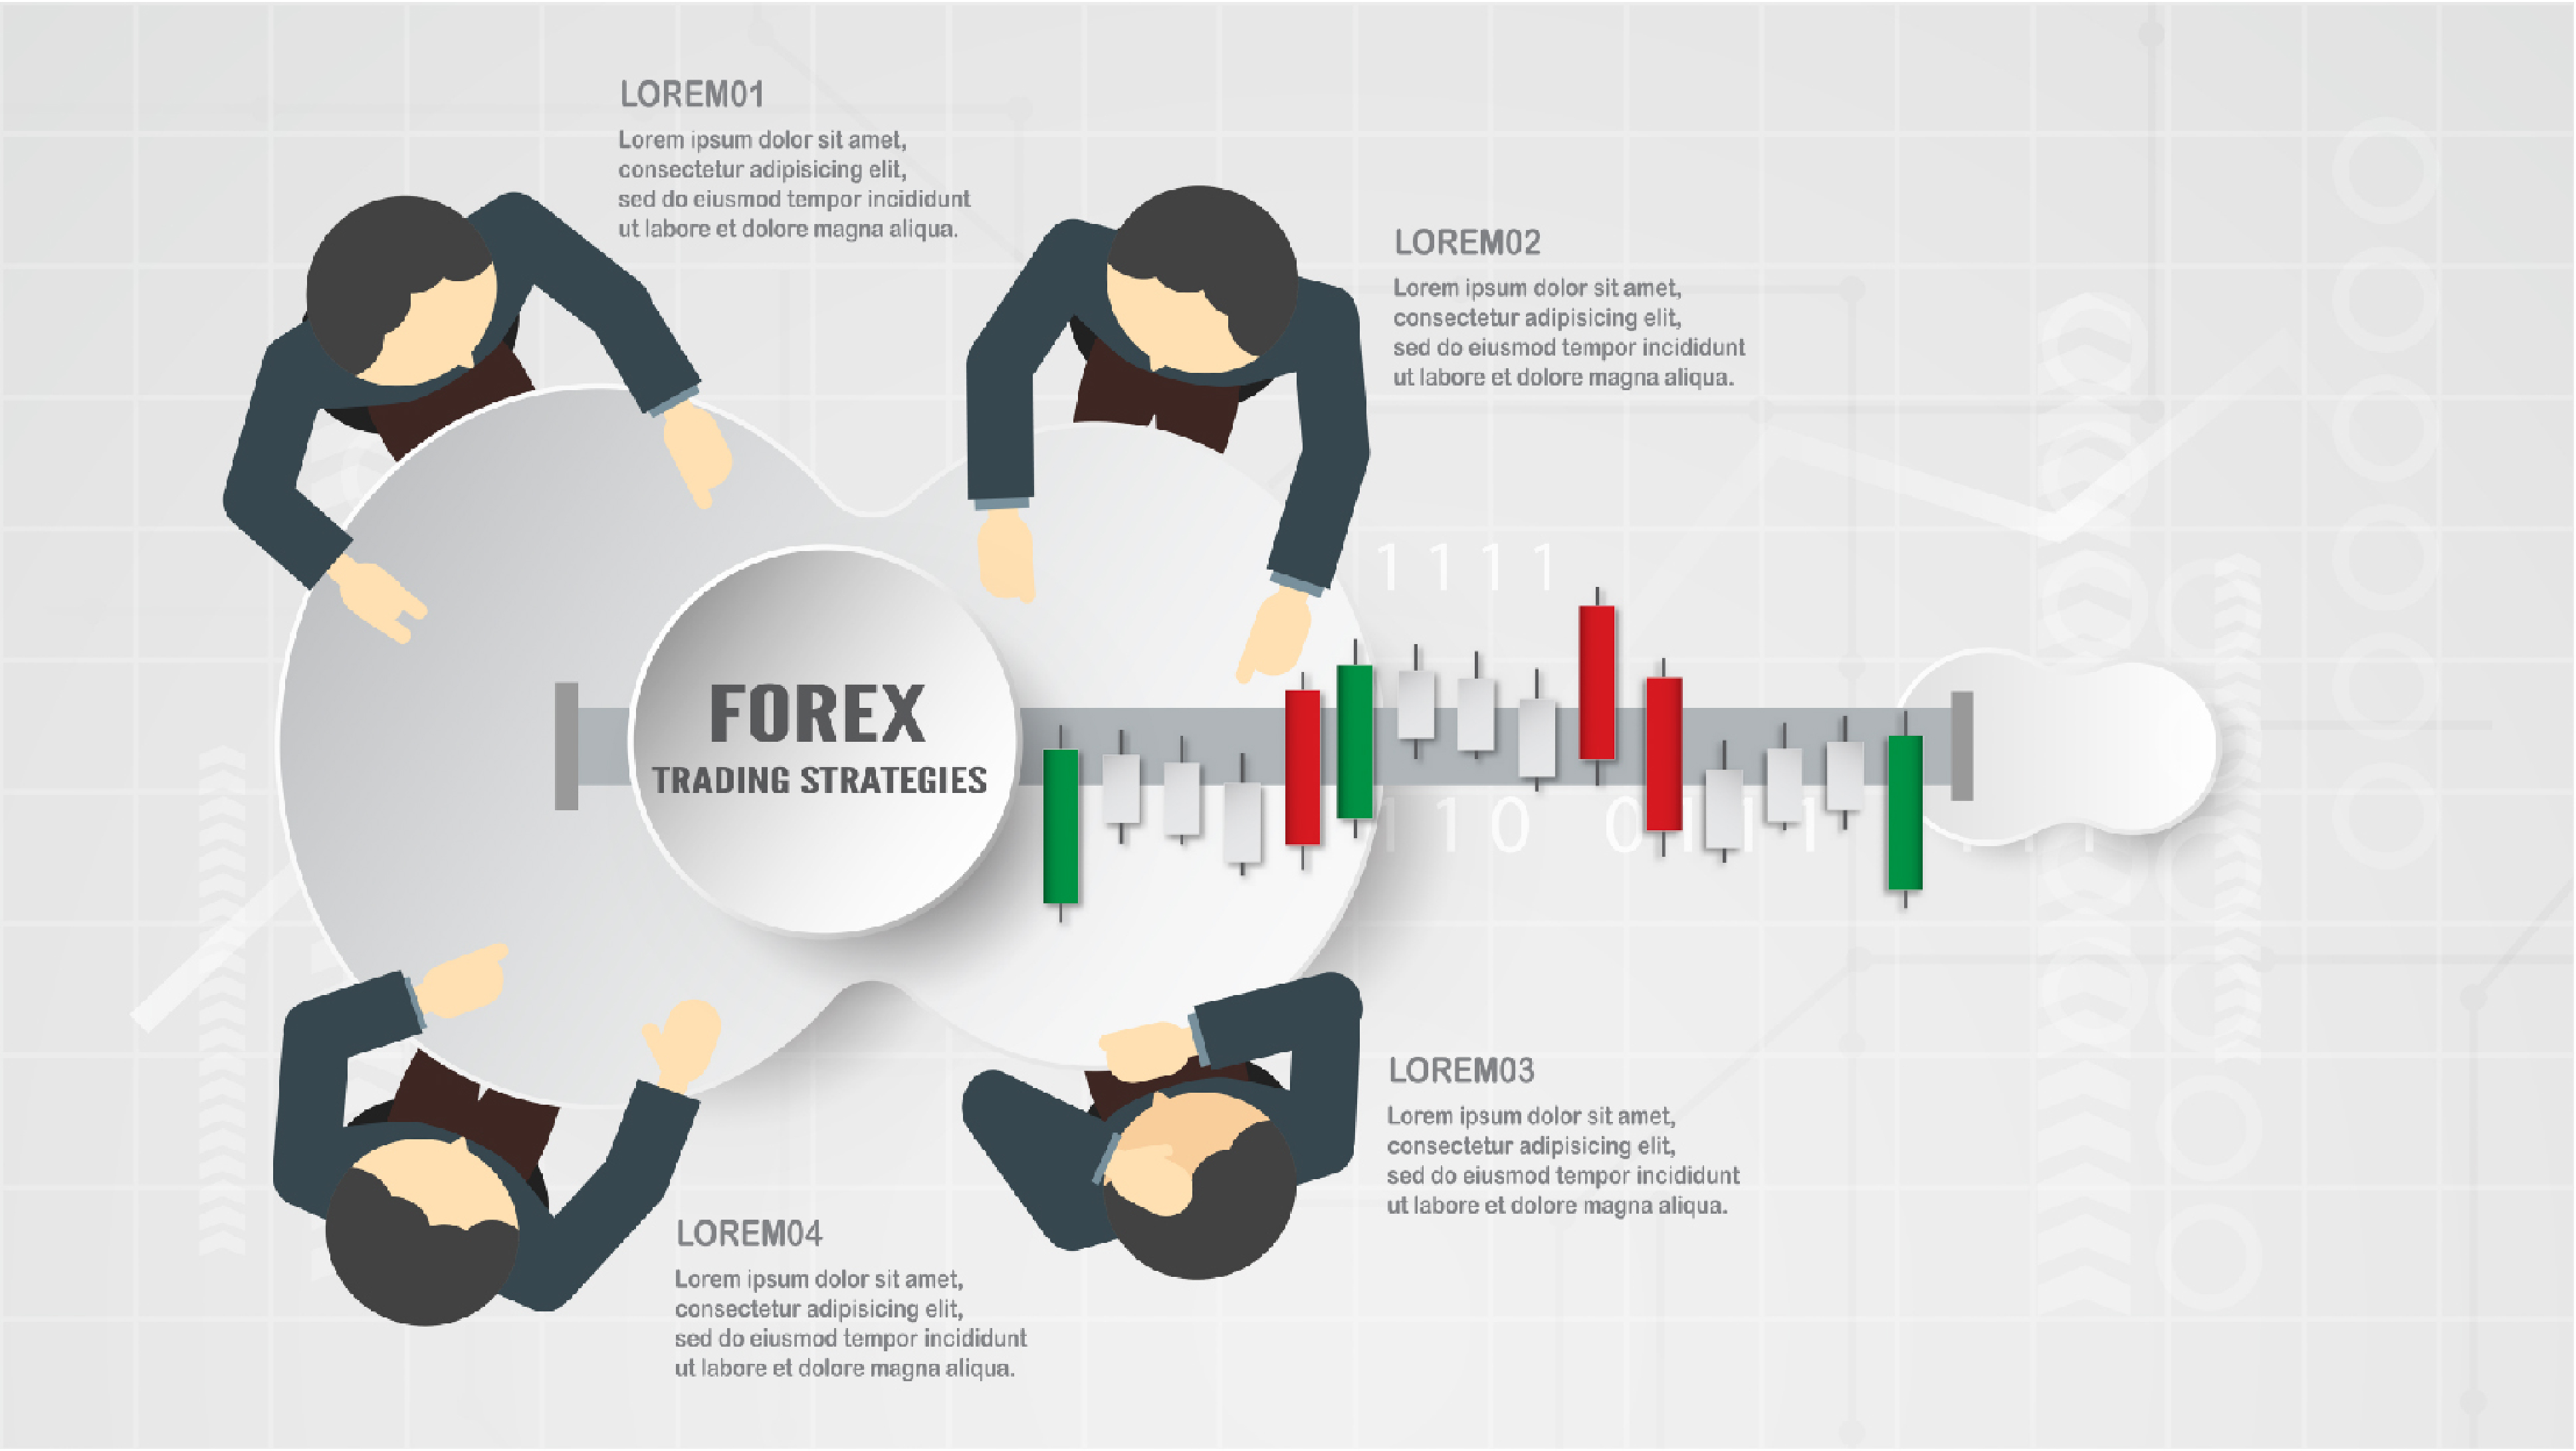 Forex trading keywords